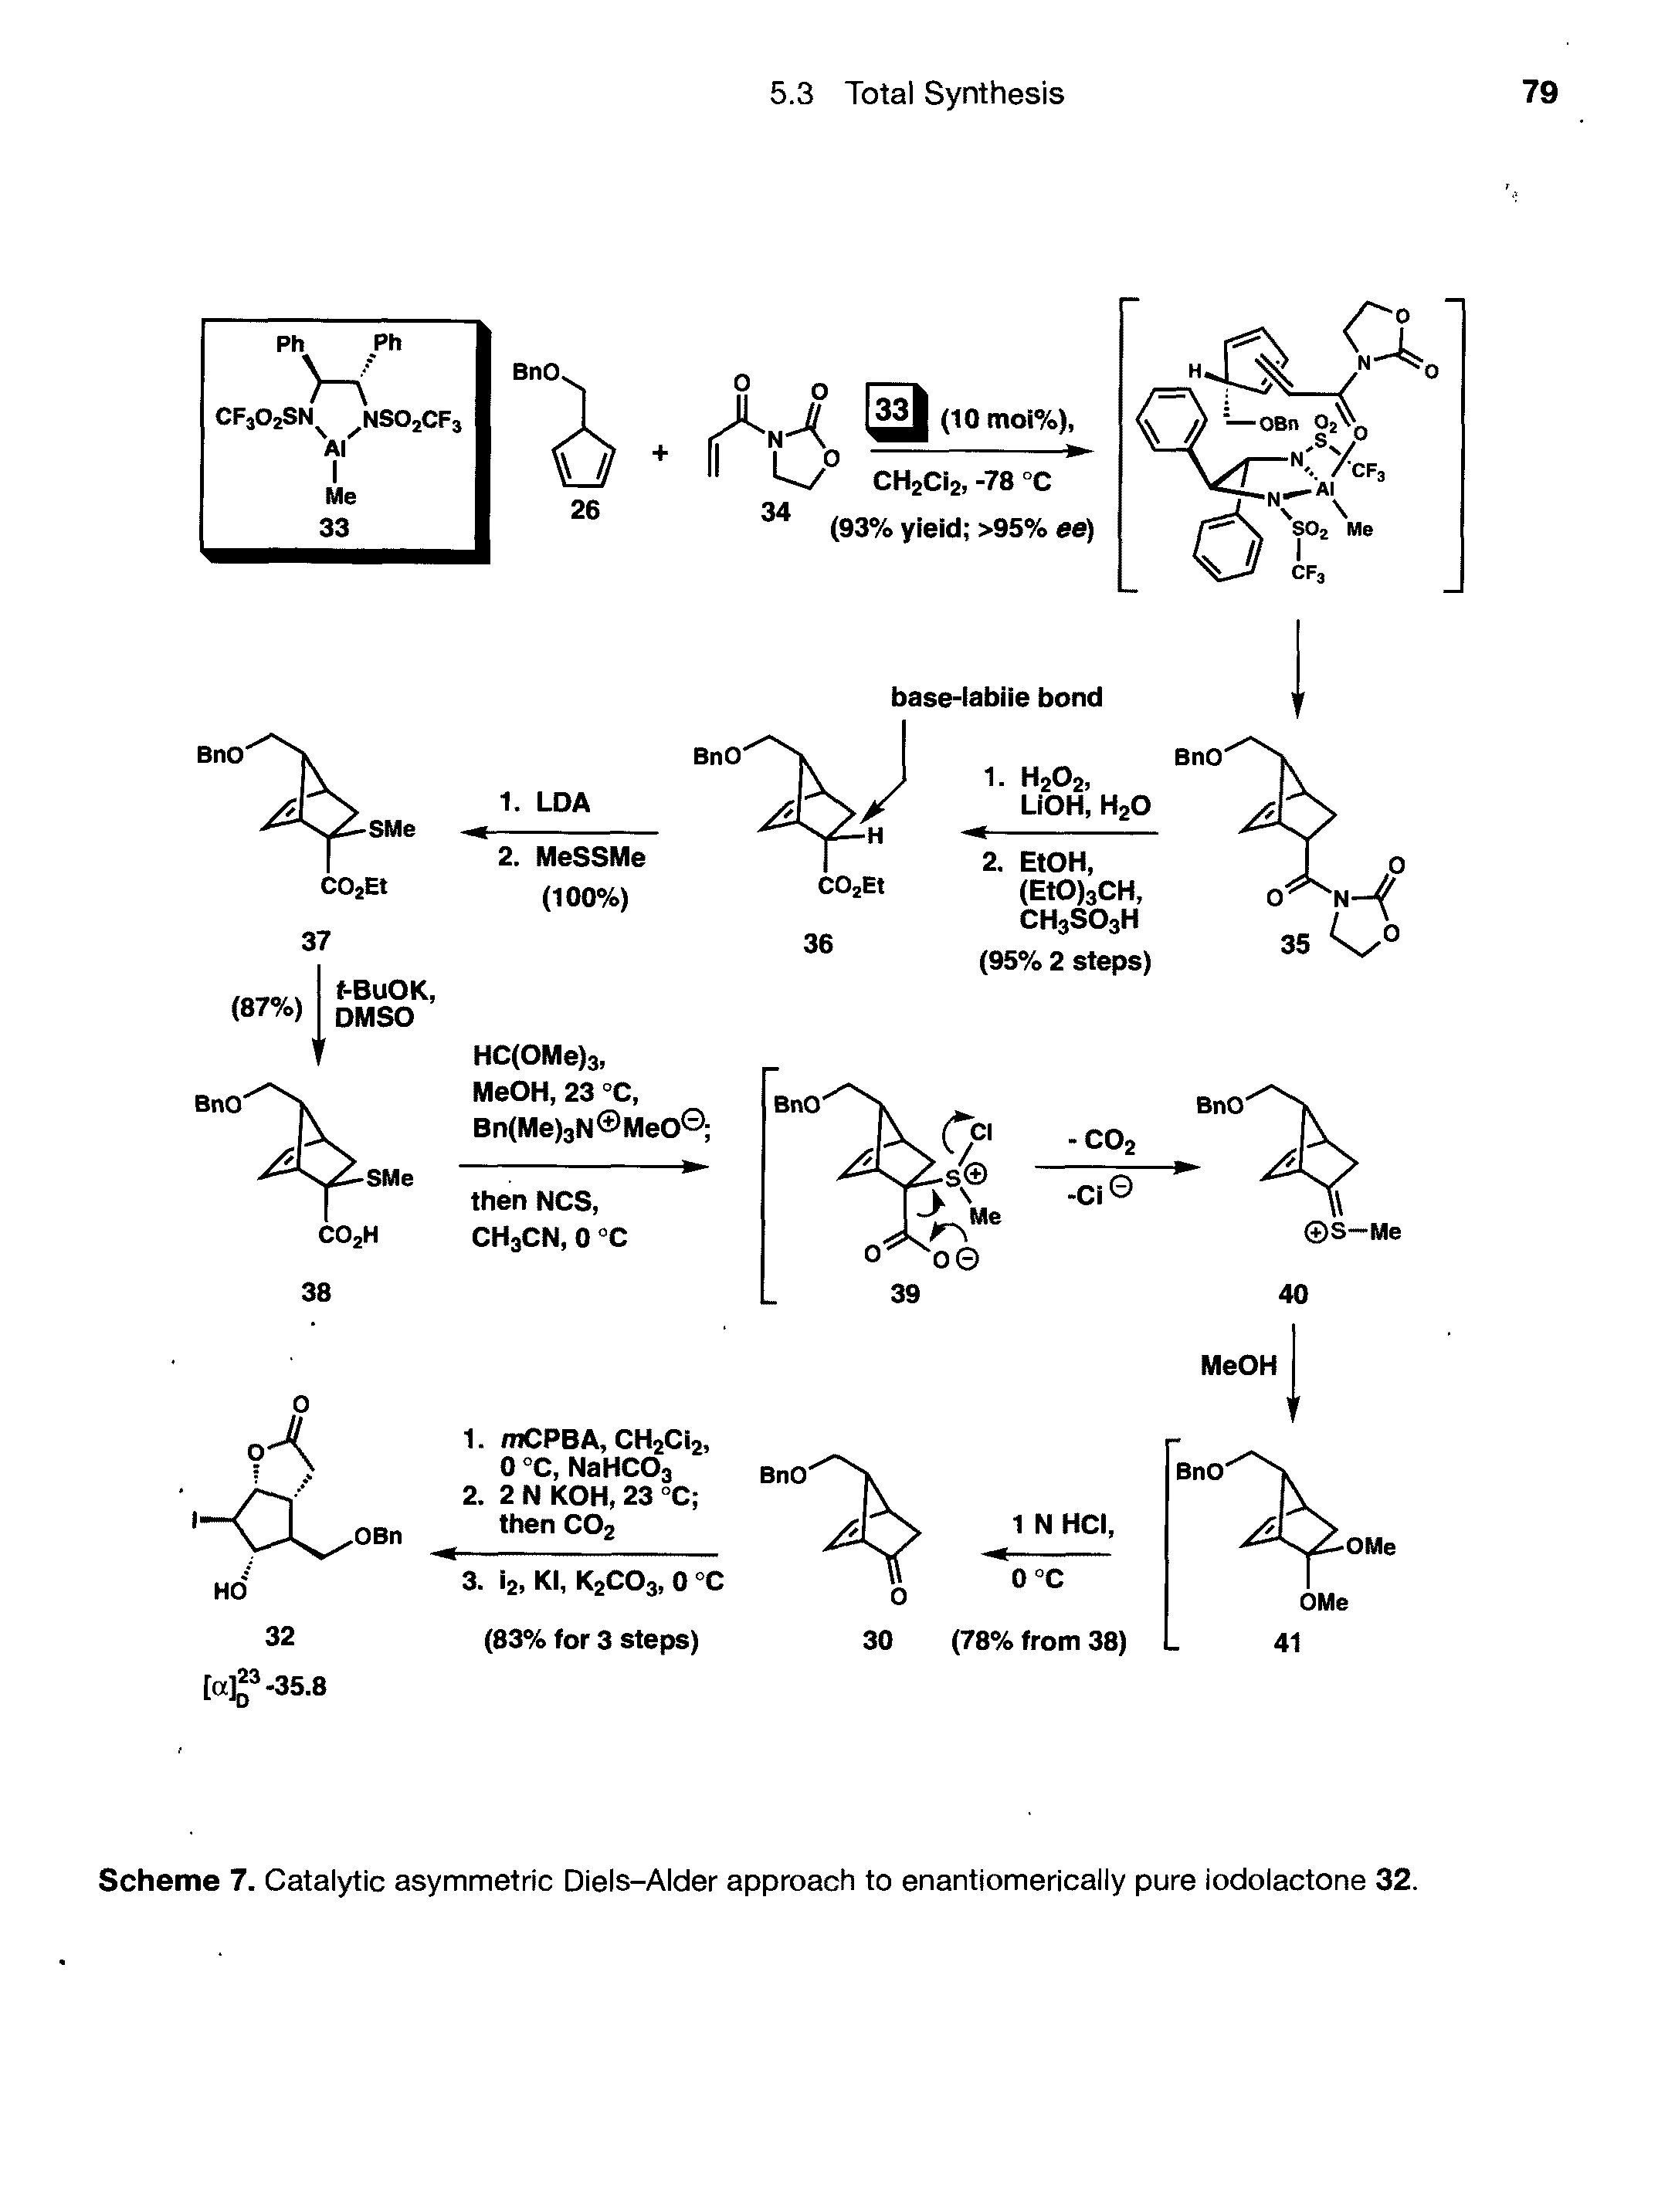 Scheme 7. Catalytic asymmetric Diels-Alder approach to enantiomerically pure iodolactone 32.